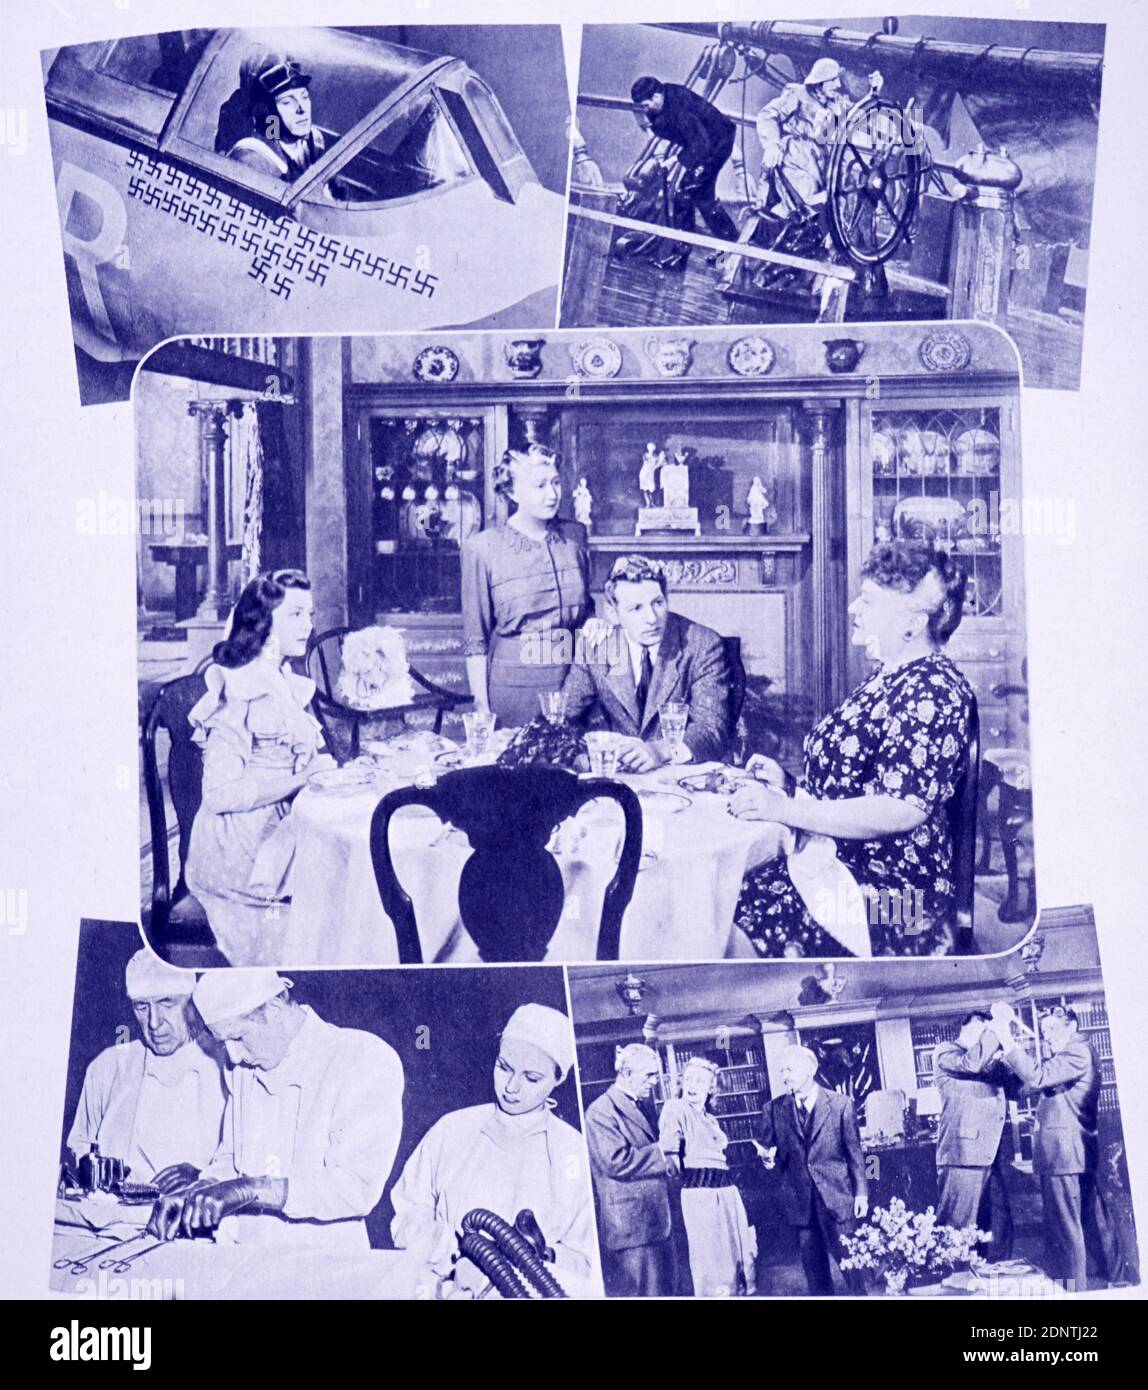 Film stills from 'The Secret Life of Walter Mitty' starring Danny Kaye, Virginia Mayo, Boris Karloff, and Ann Rutherford. Stock Photo